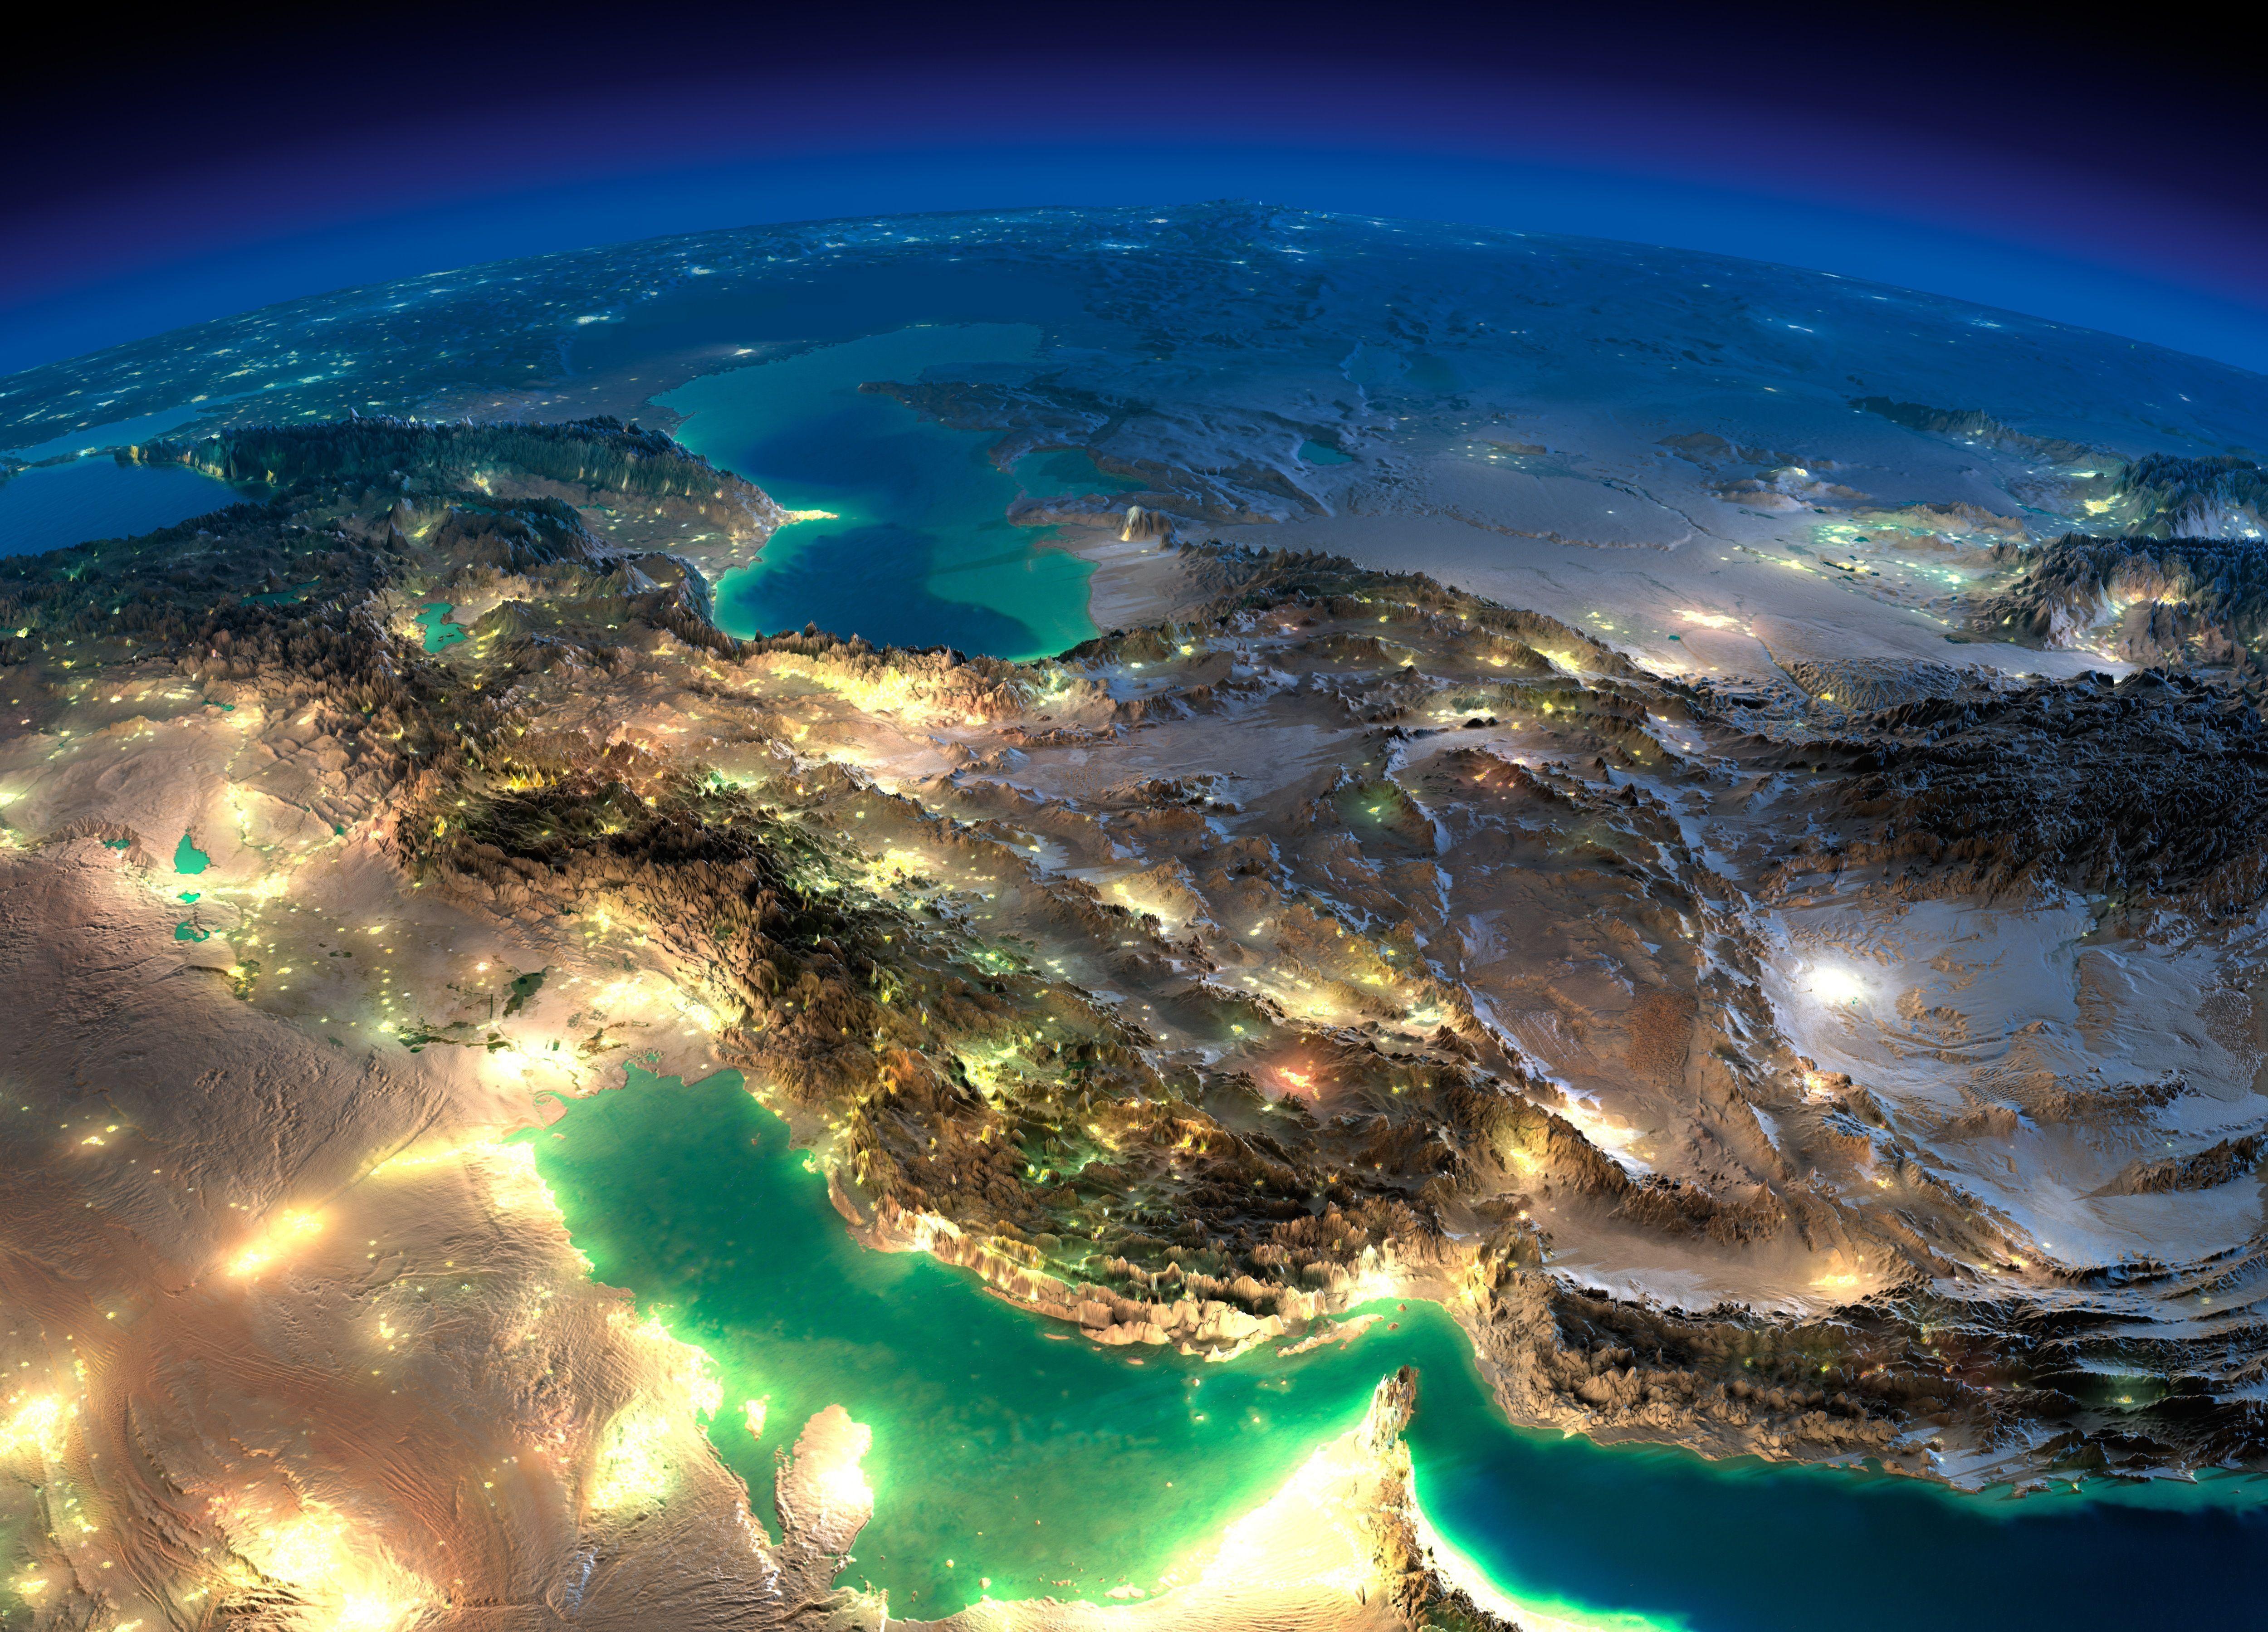 The Persian Gulf 4k Ultra HD Wallpaper. Background Image